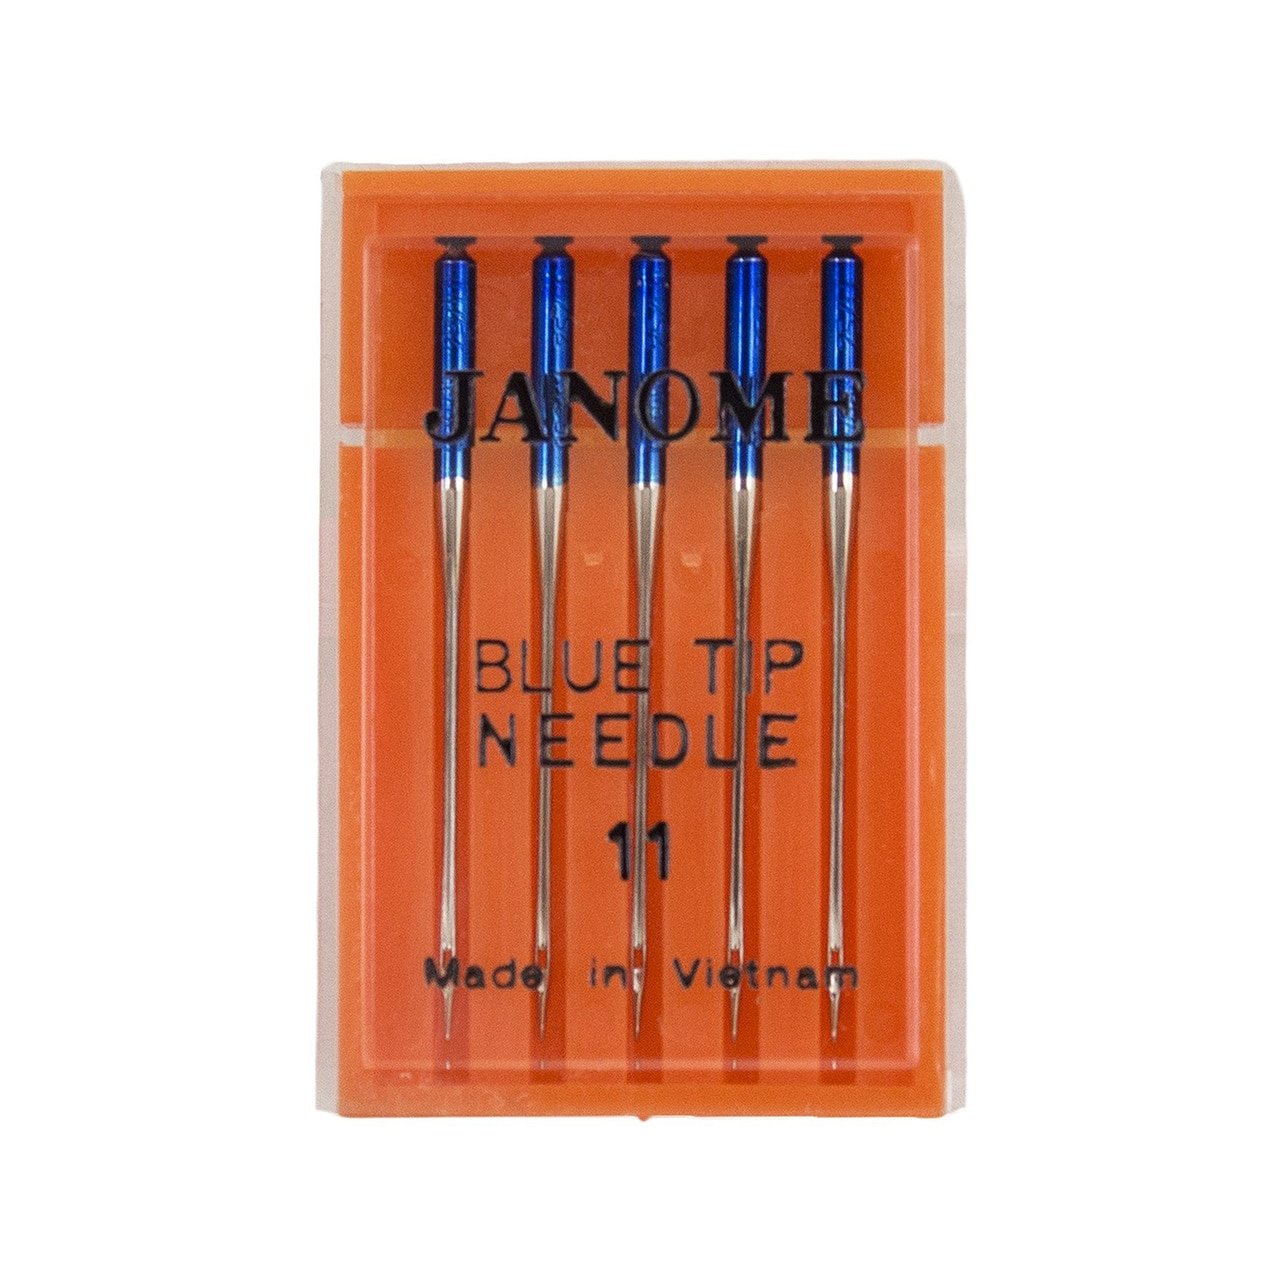 Janome 5-Pack Juego de agujas de punta azul